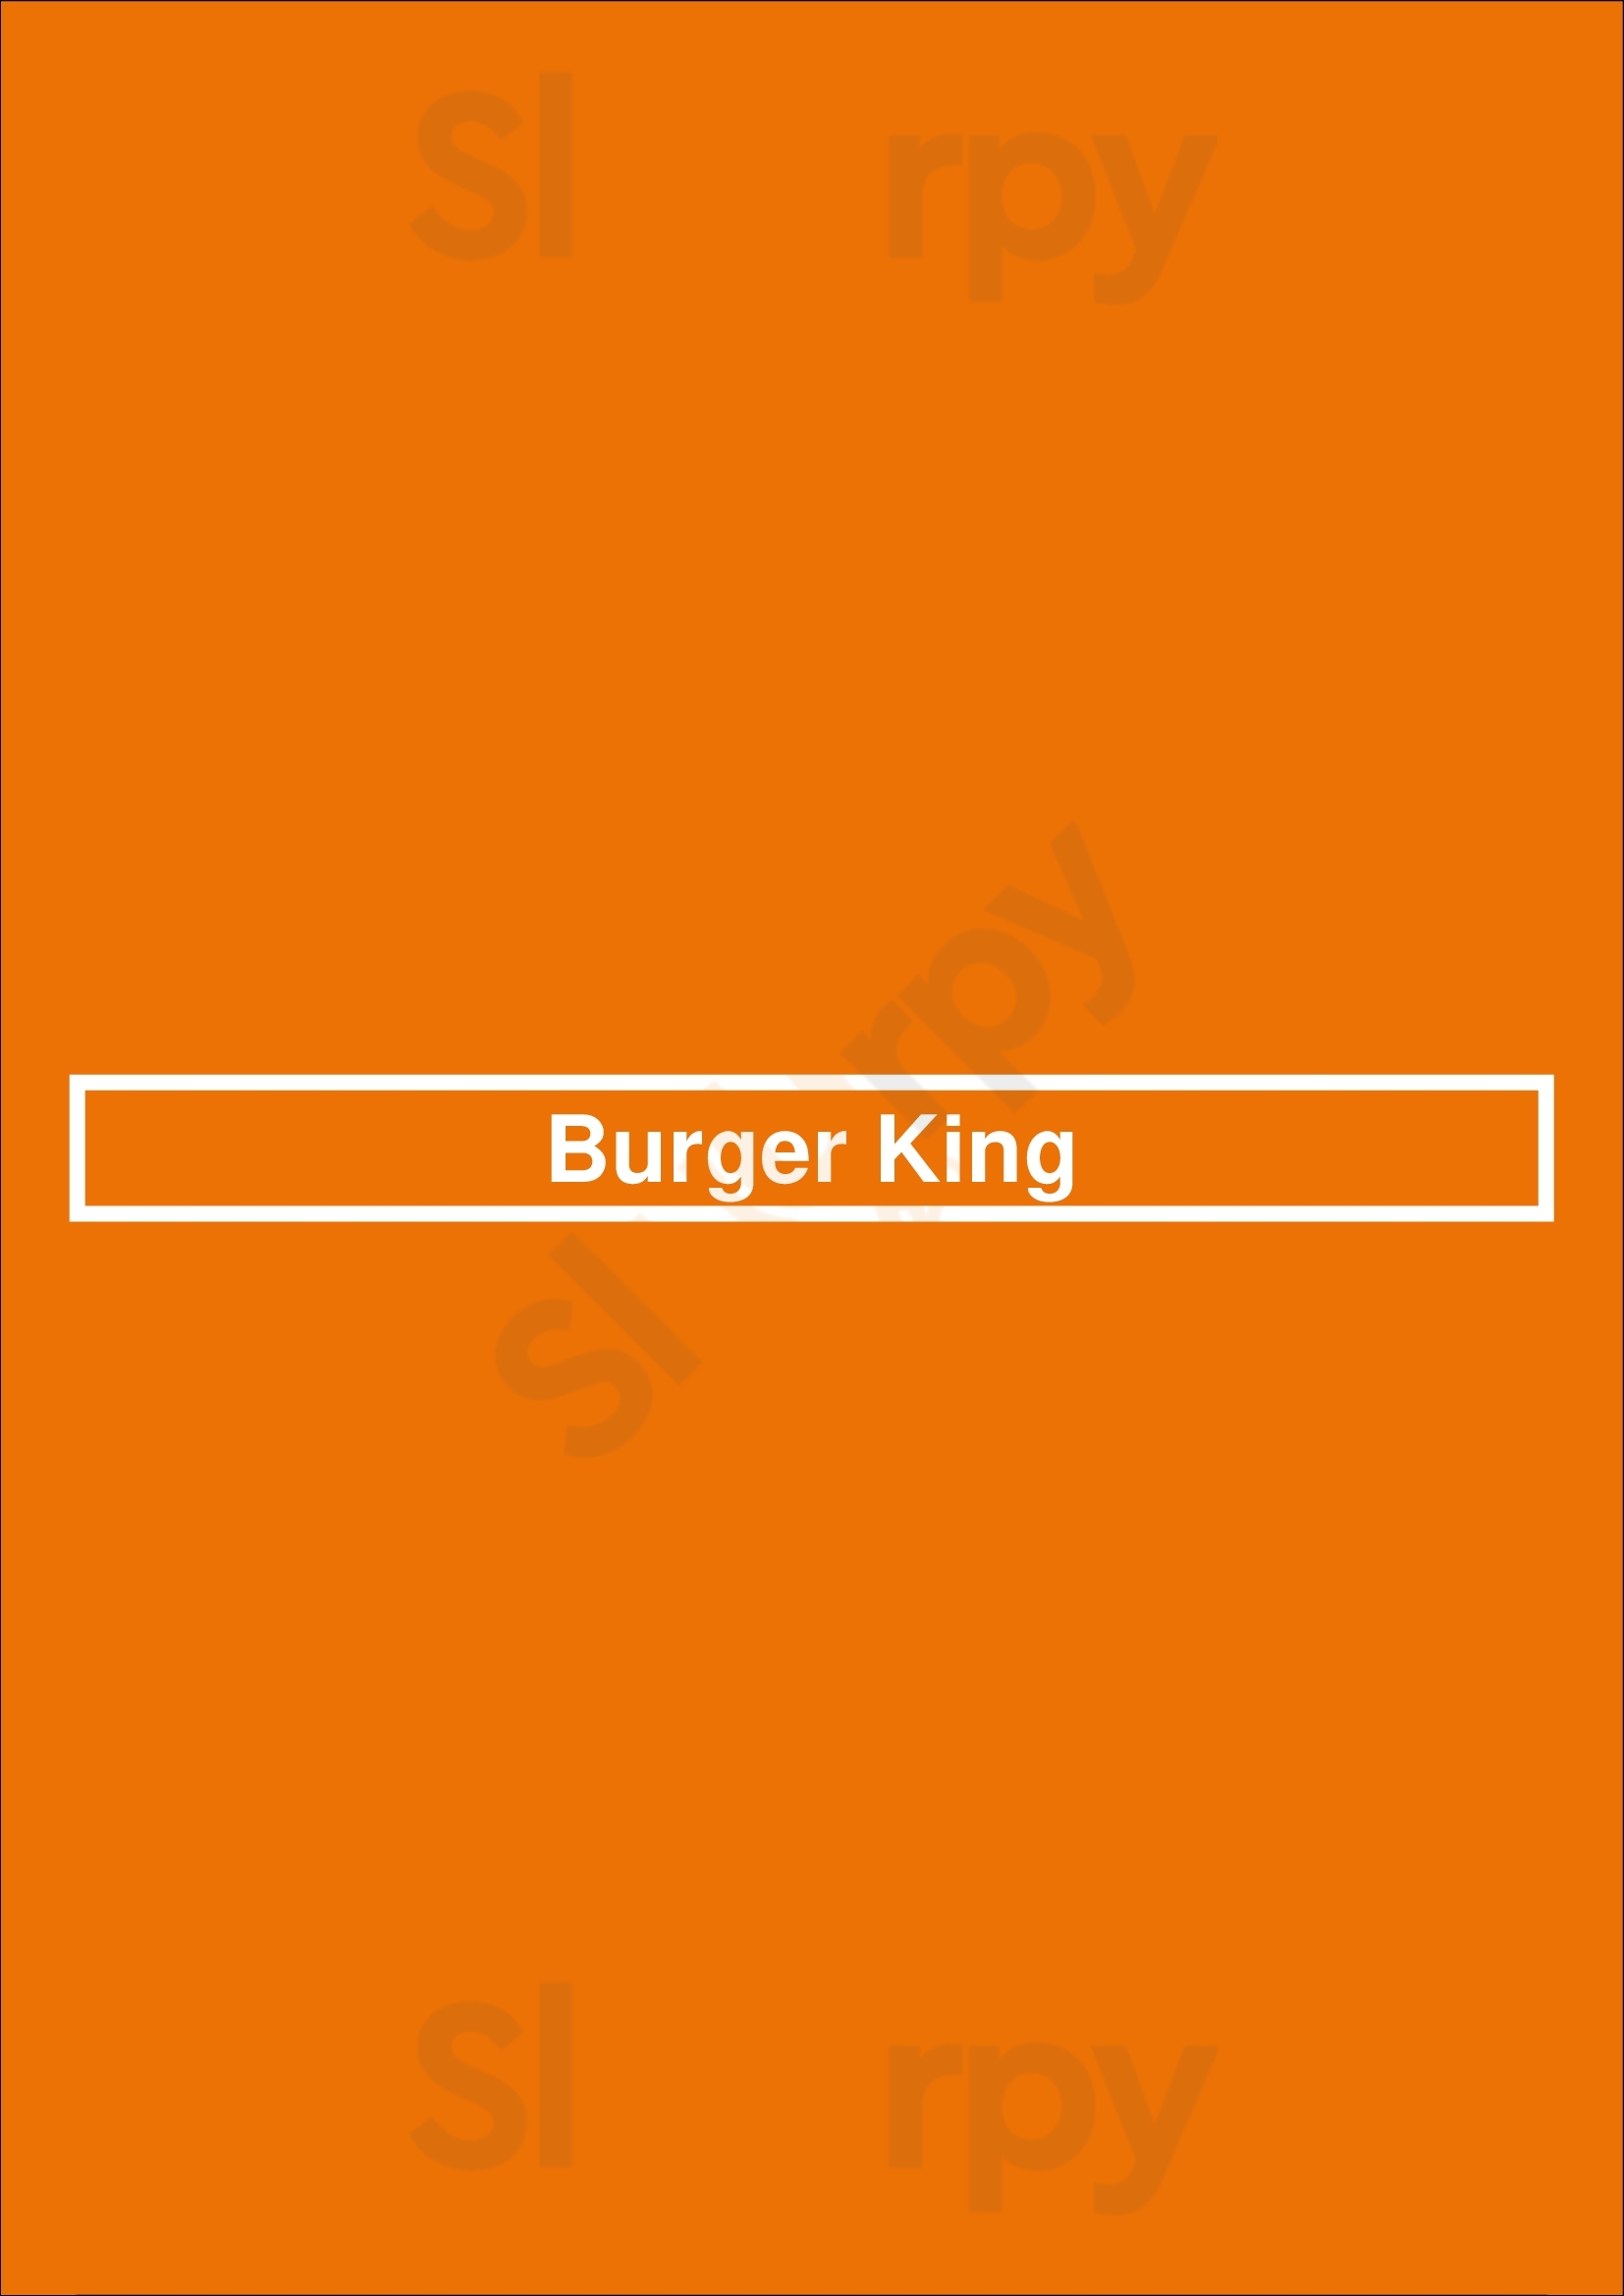 Burger King Los Angeles Menu - 1